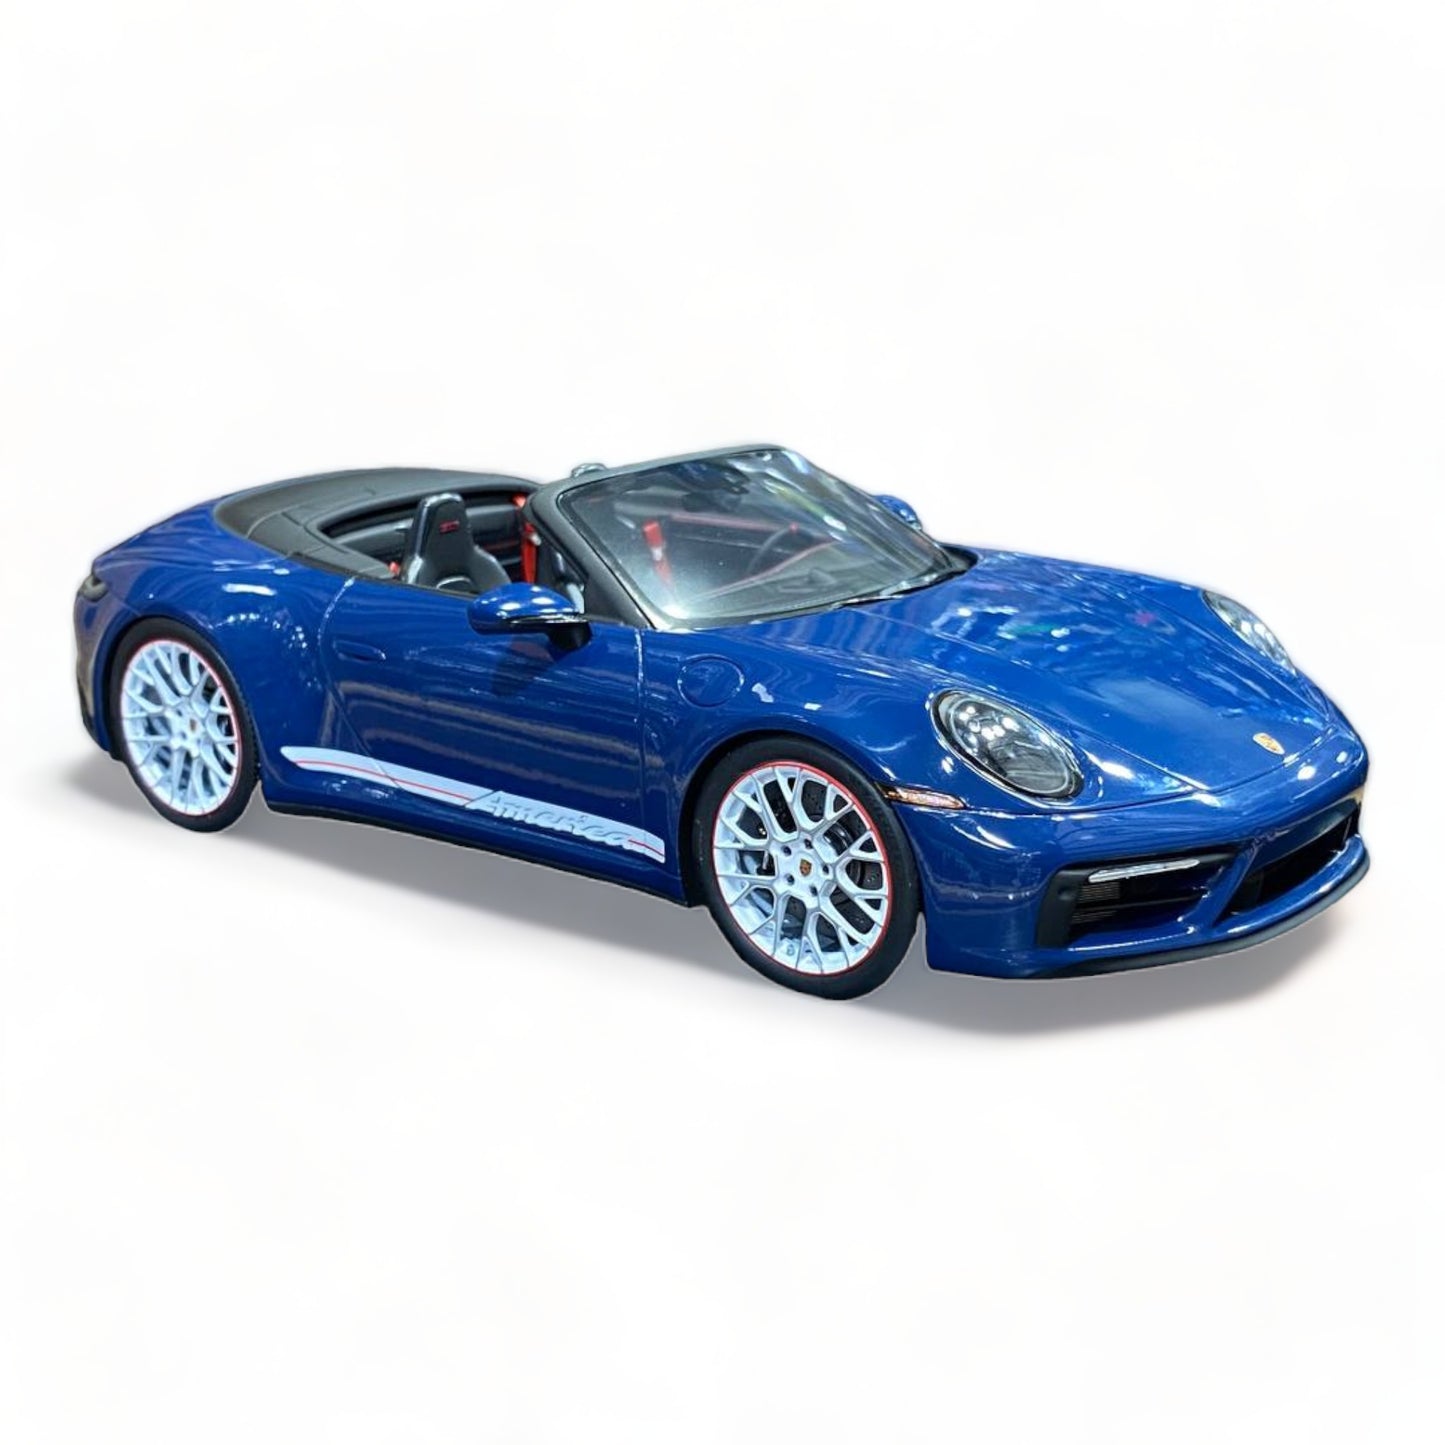 Porsche 911 Carrera GTS Cabriolet America Edition AzurBlue by Spark Model|Sold in Dturman.com Dubai UAE.